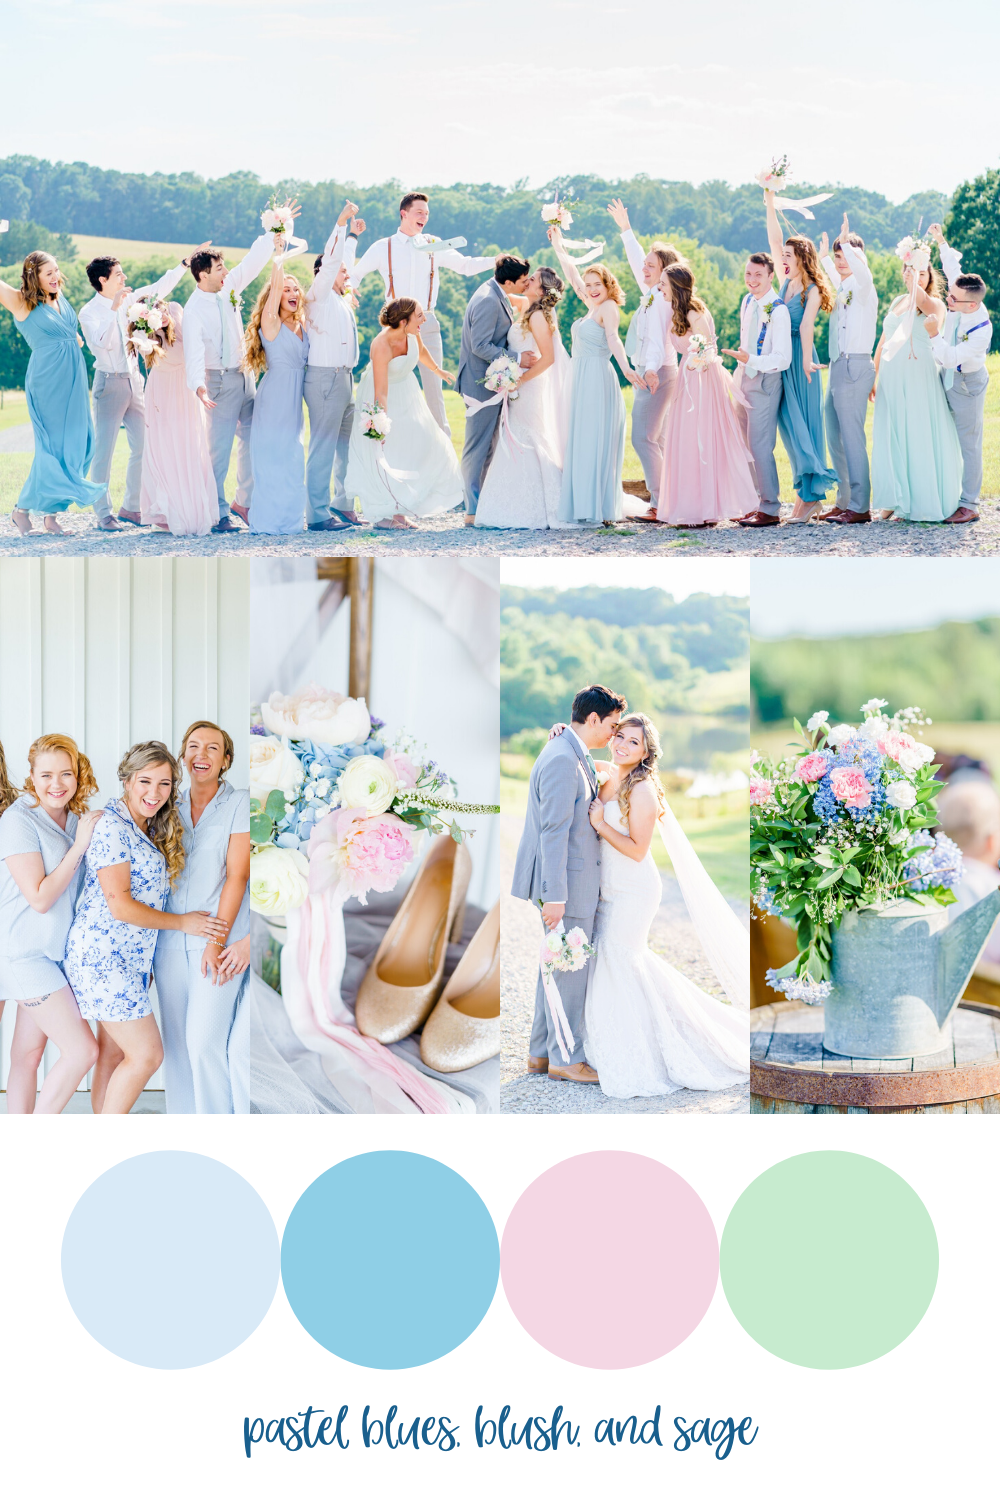 7 Gorgeous Dusty Blue Wedding Color Ideas For 2019 Brides Emmalovesweddings